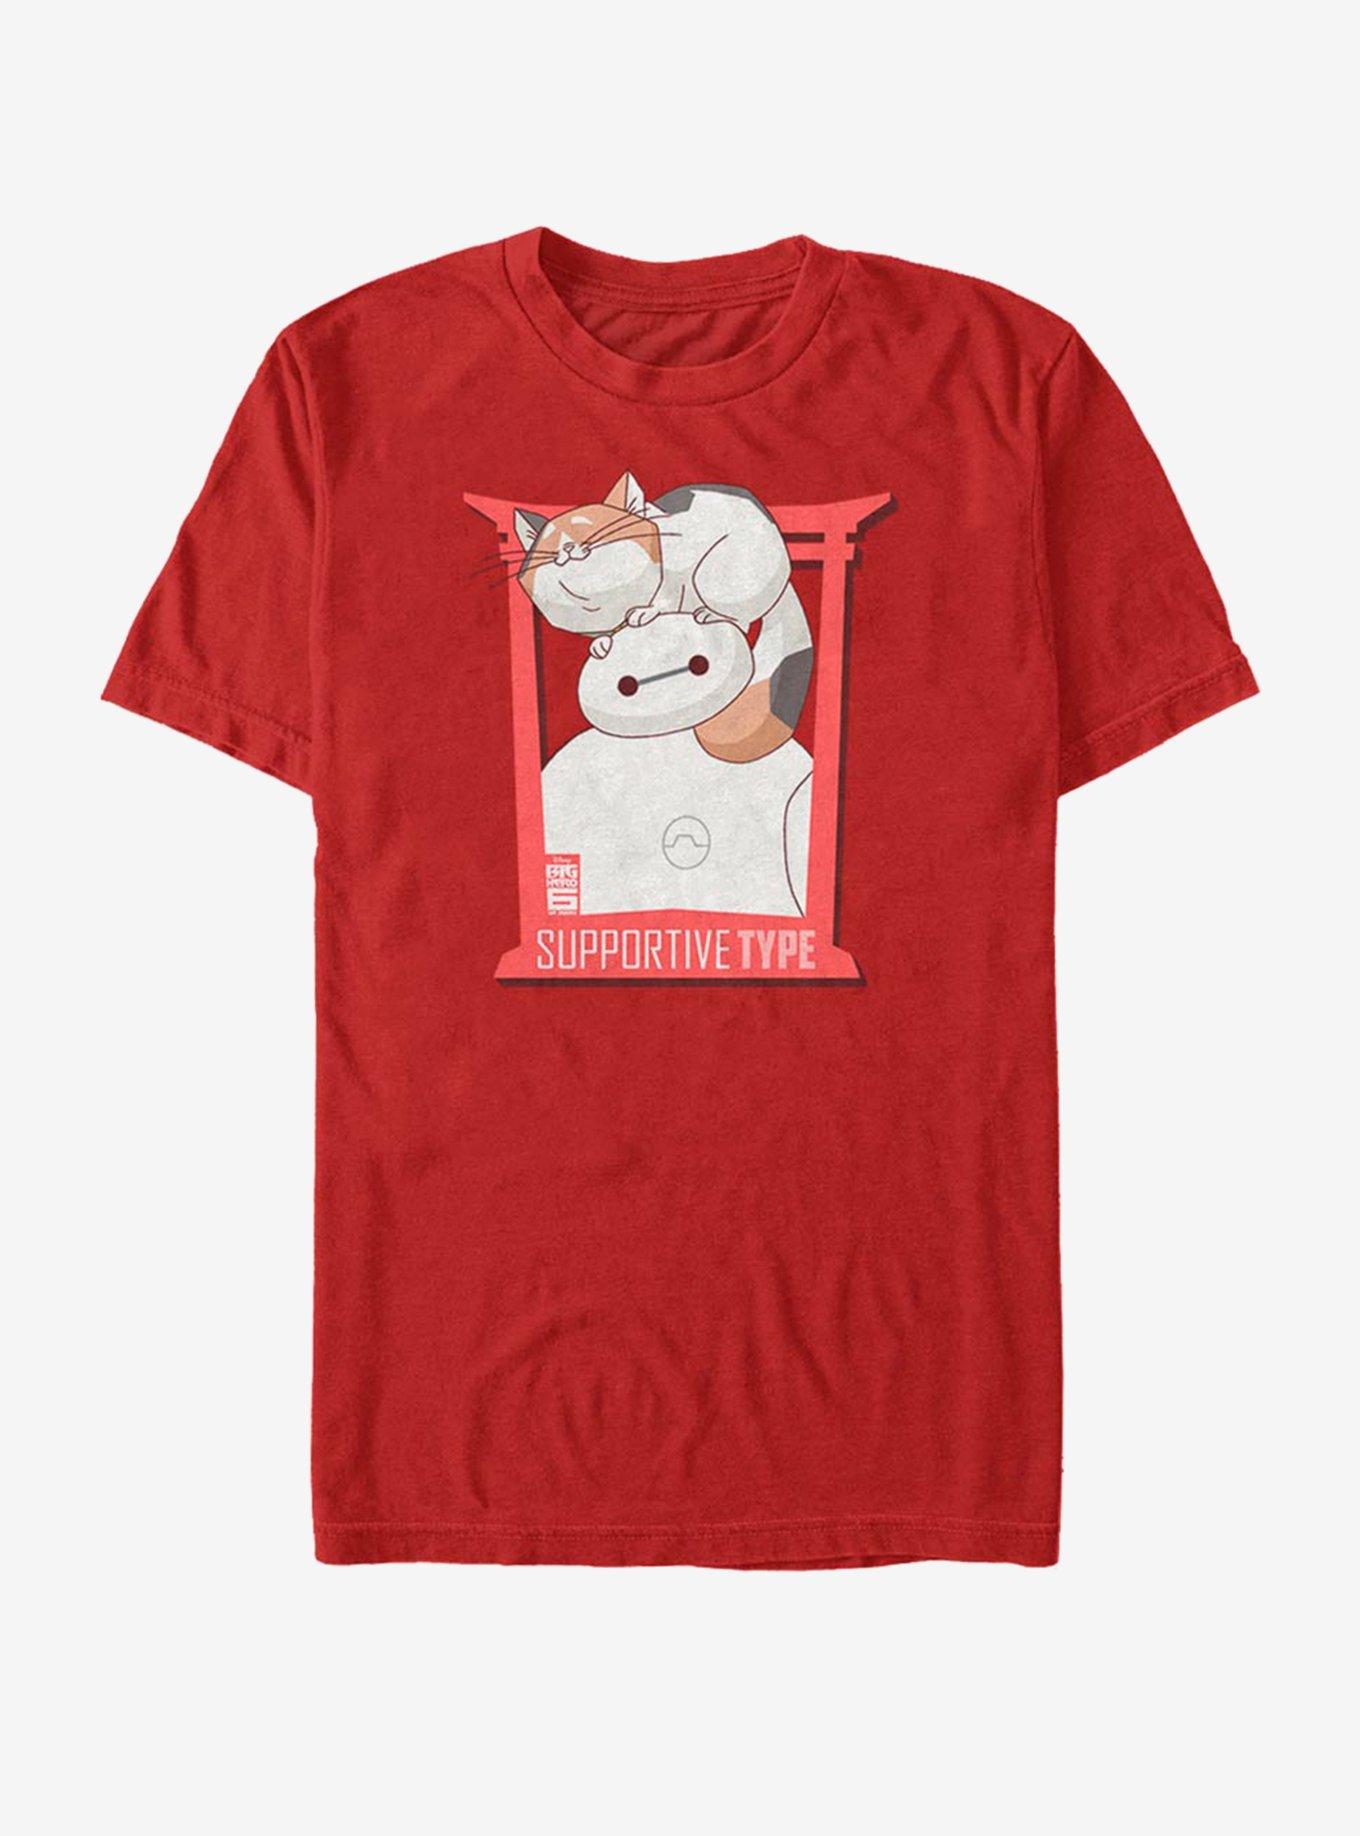 Disney Pixar Big Hero 6 Supportive Type T-Shirt, RED, hi-res